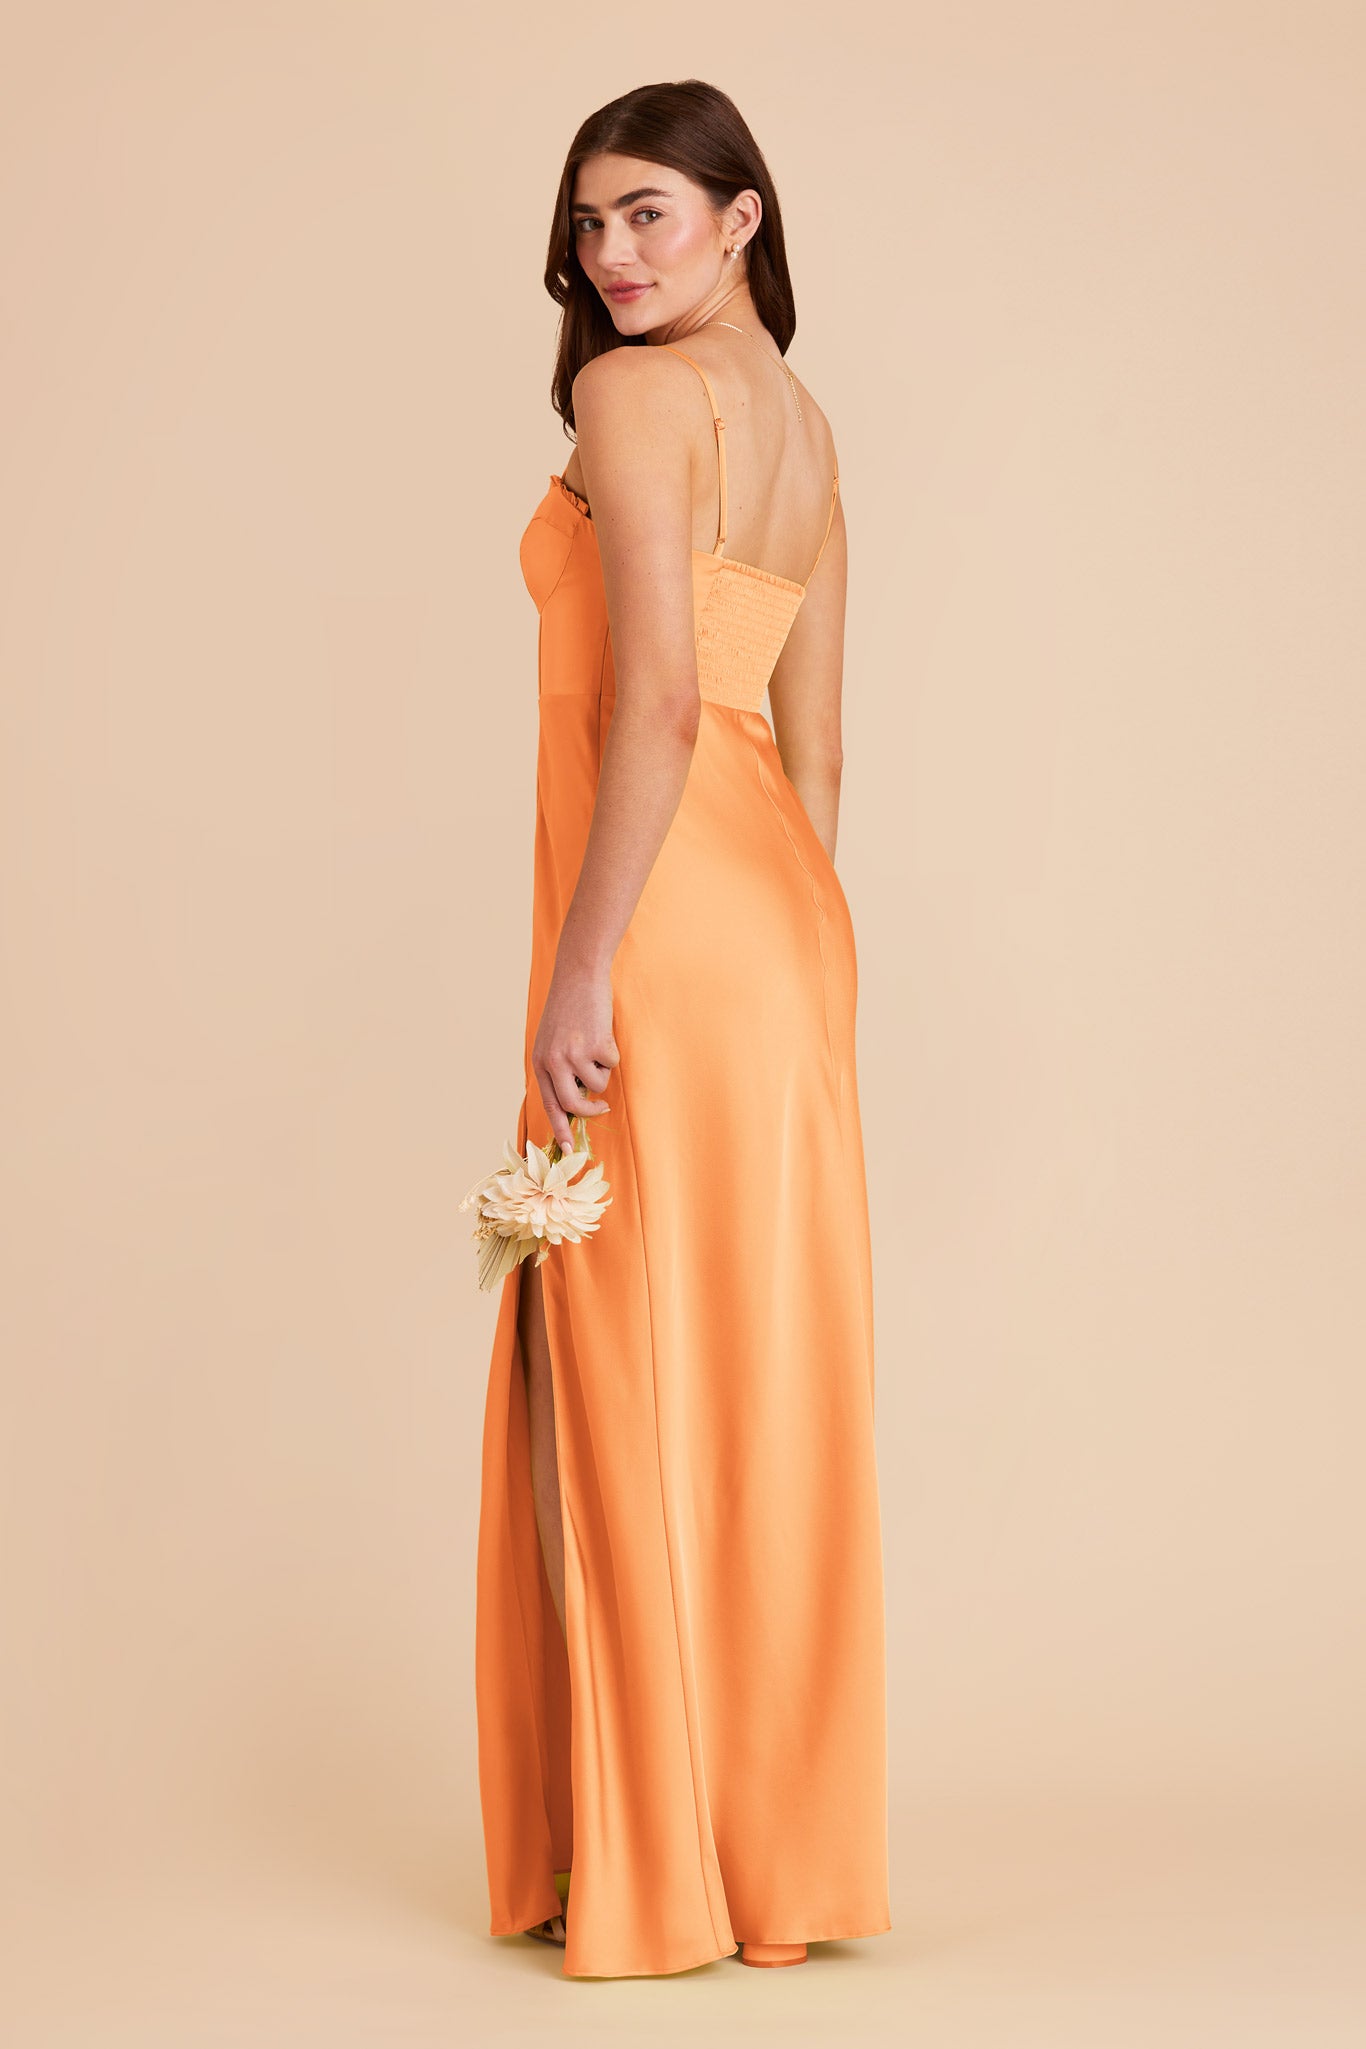 Apricot Jessica Matte Satin Dress by Birdy Grey